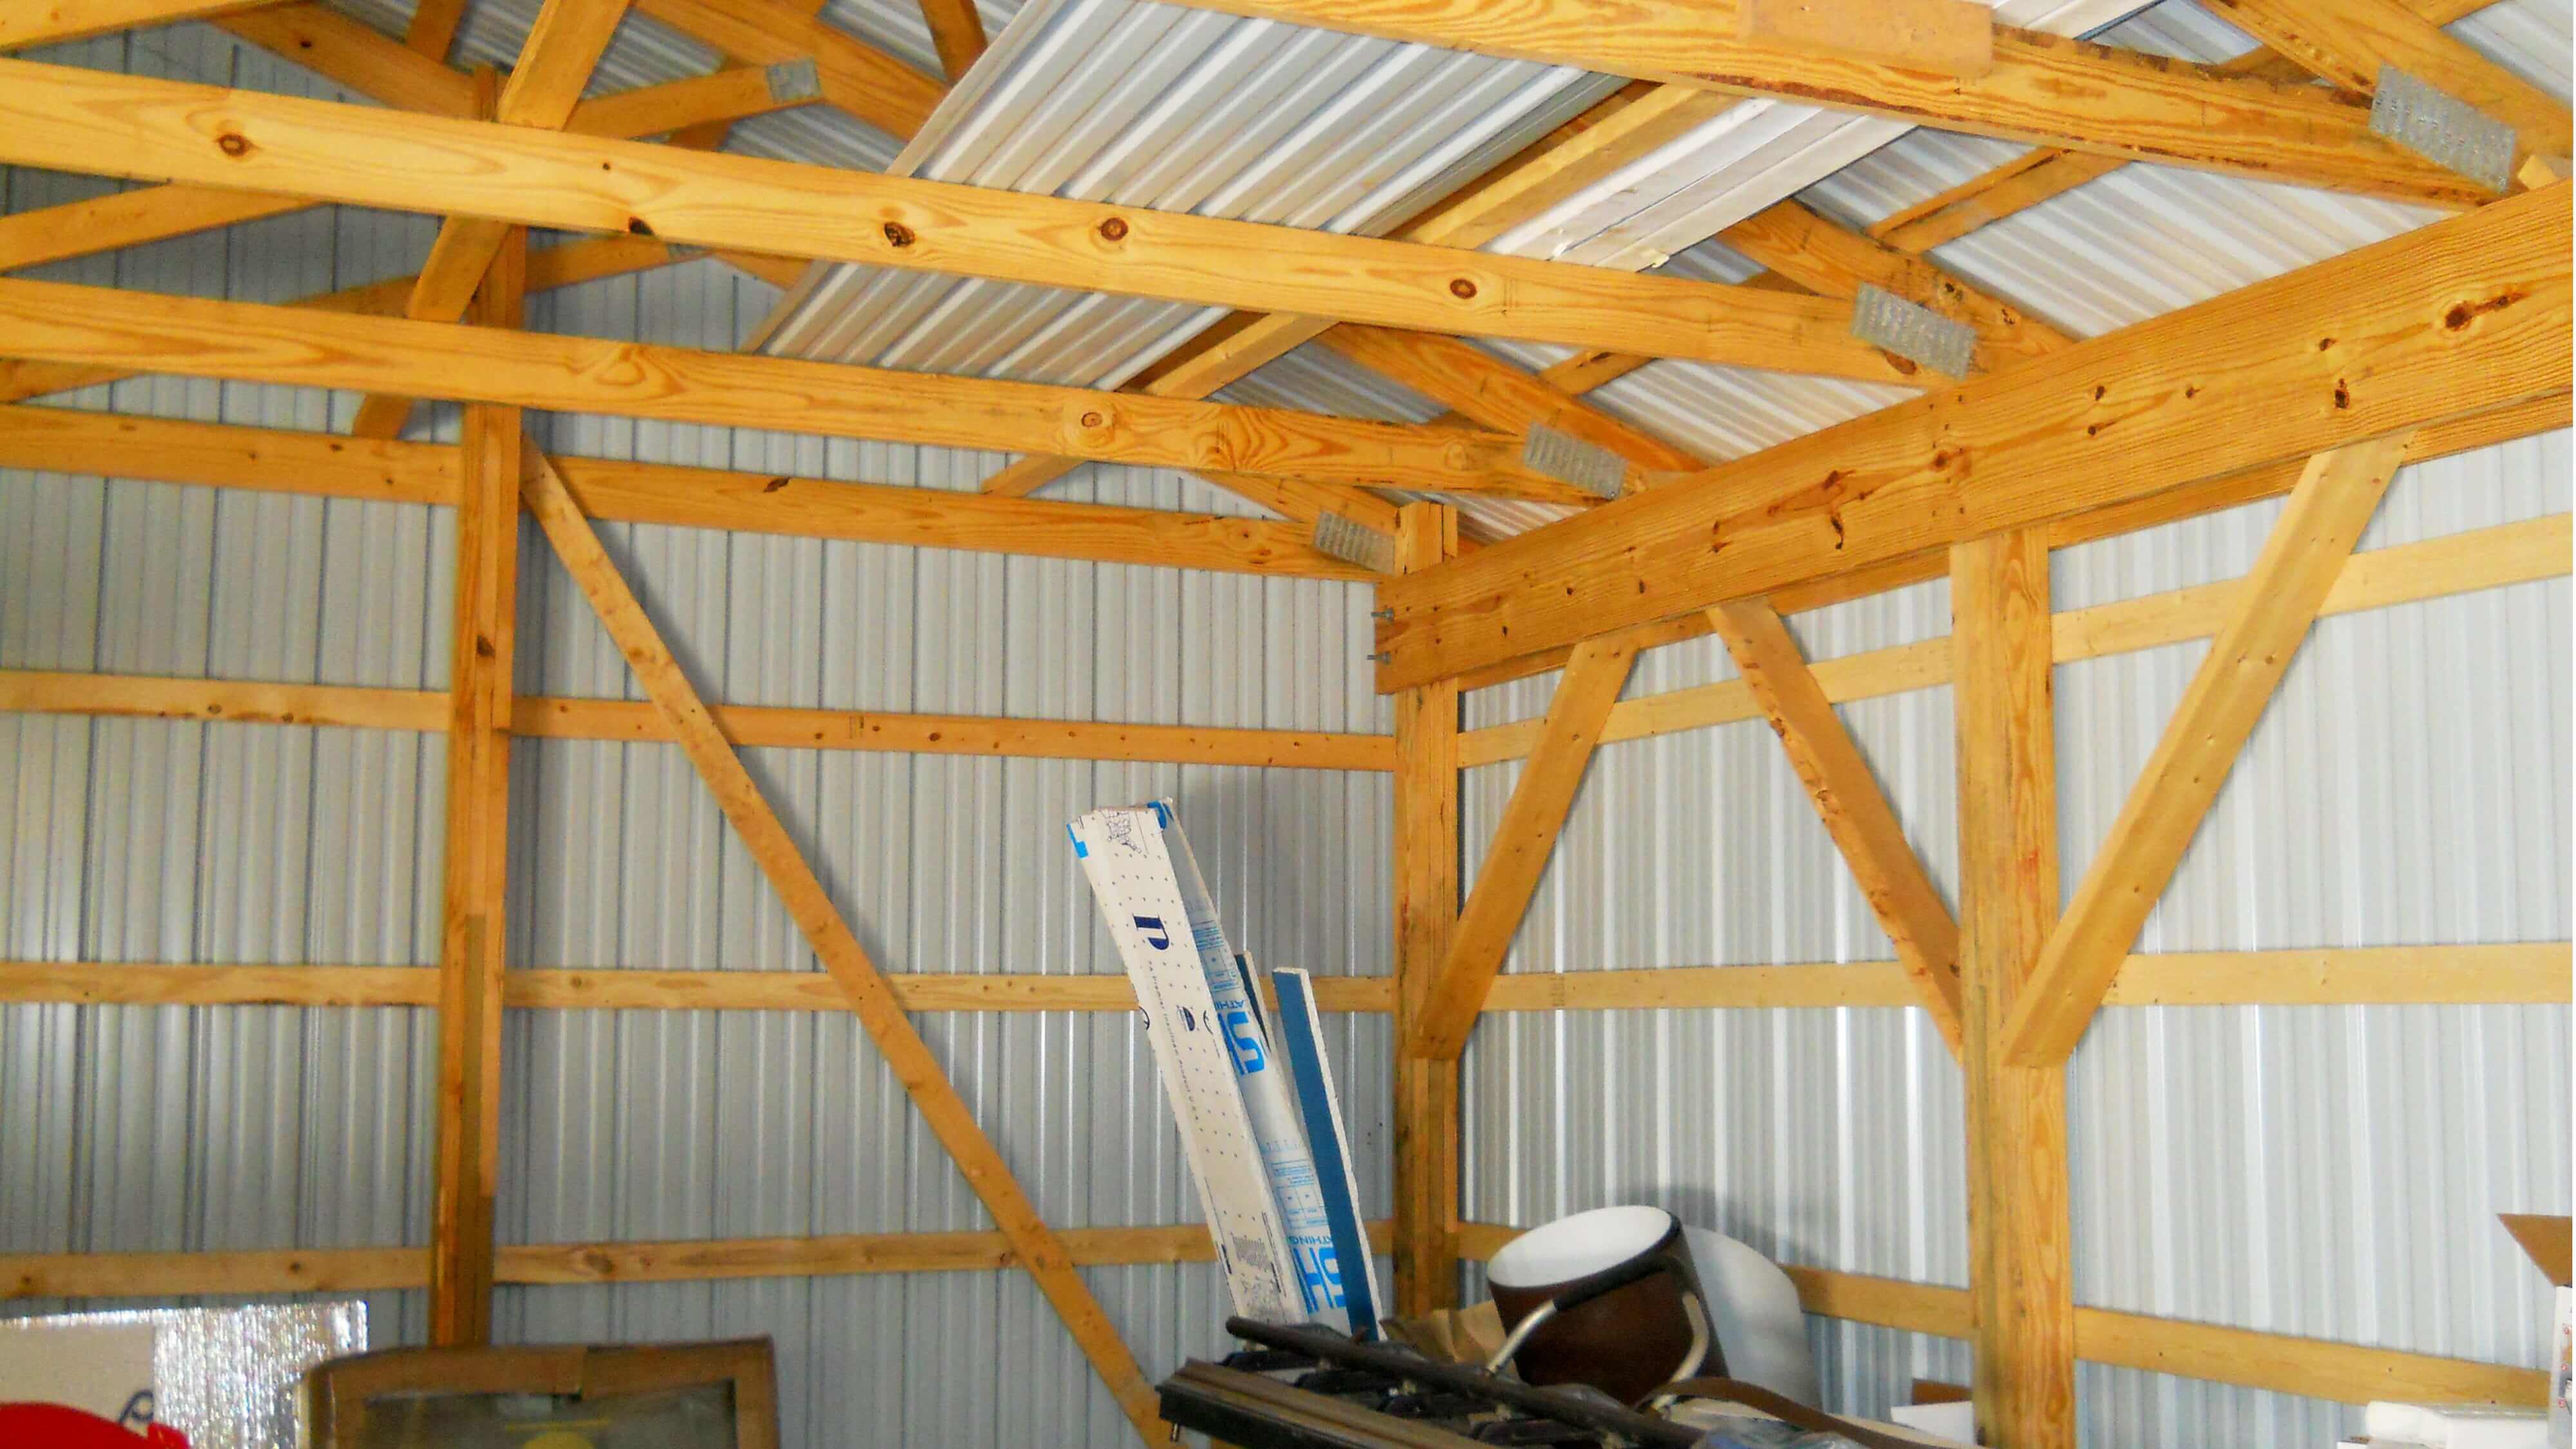 May 2020 | 24' x 32' x 10' Garage Pole Building Kit